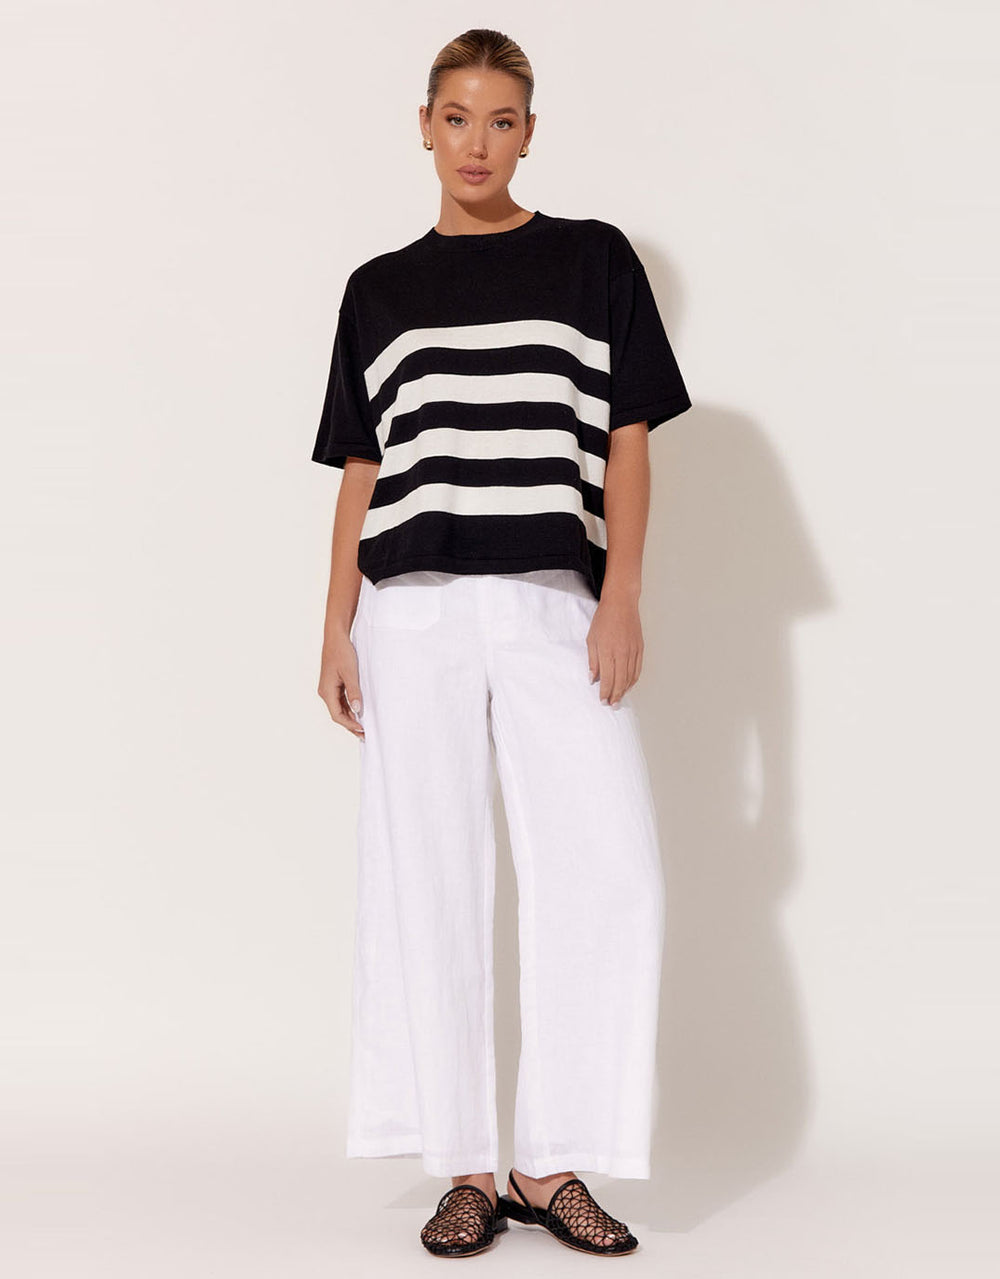 adorne-laney-cotton-cashmere-knit-top-black-white-womens-clothing